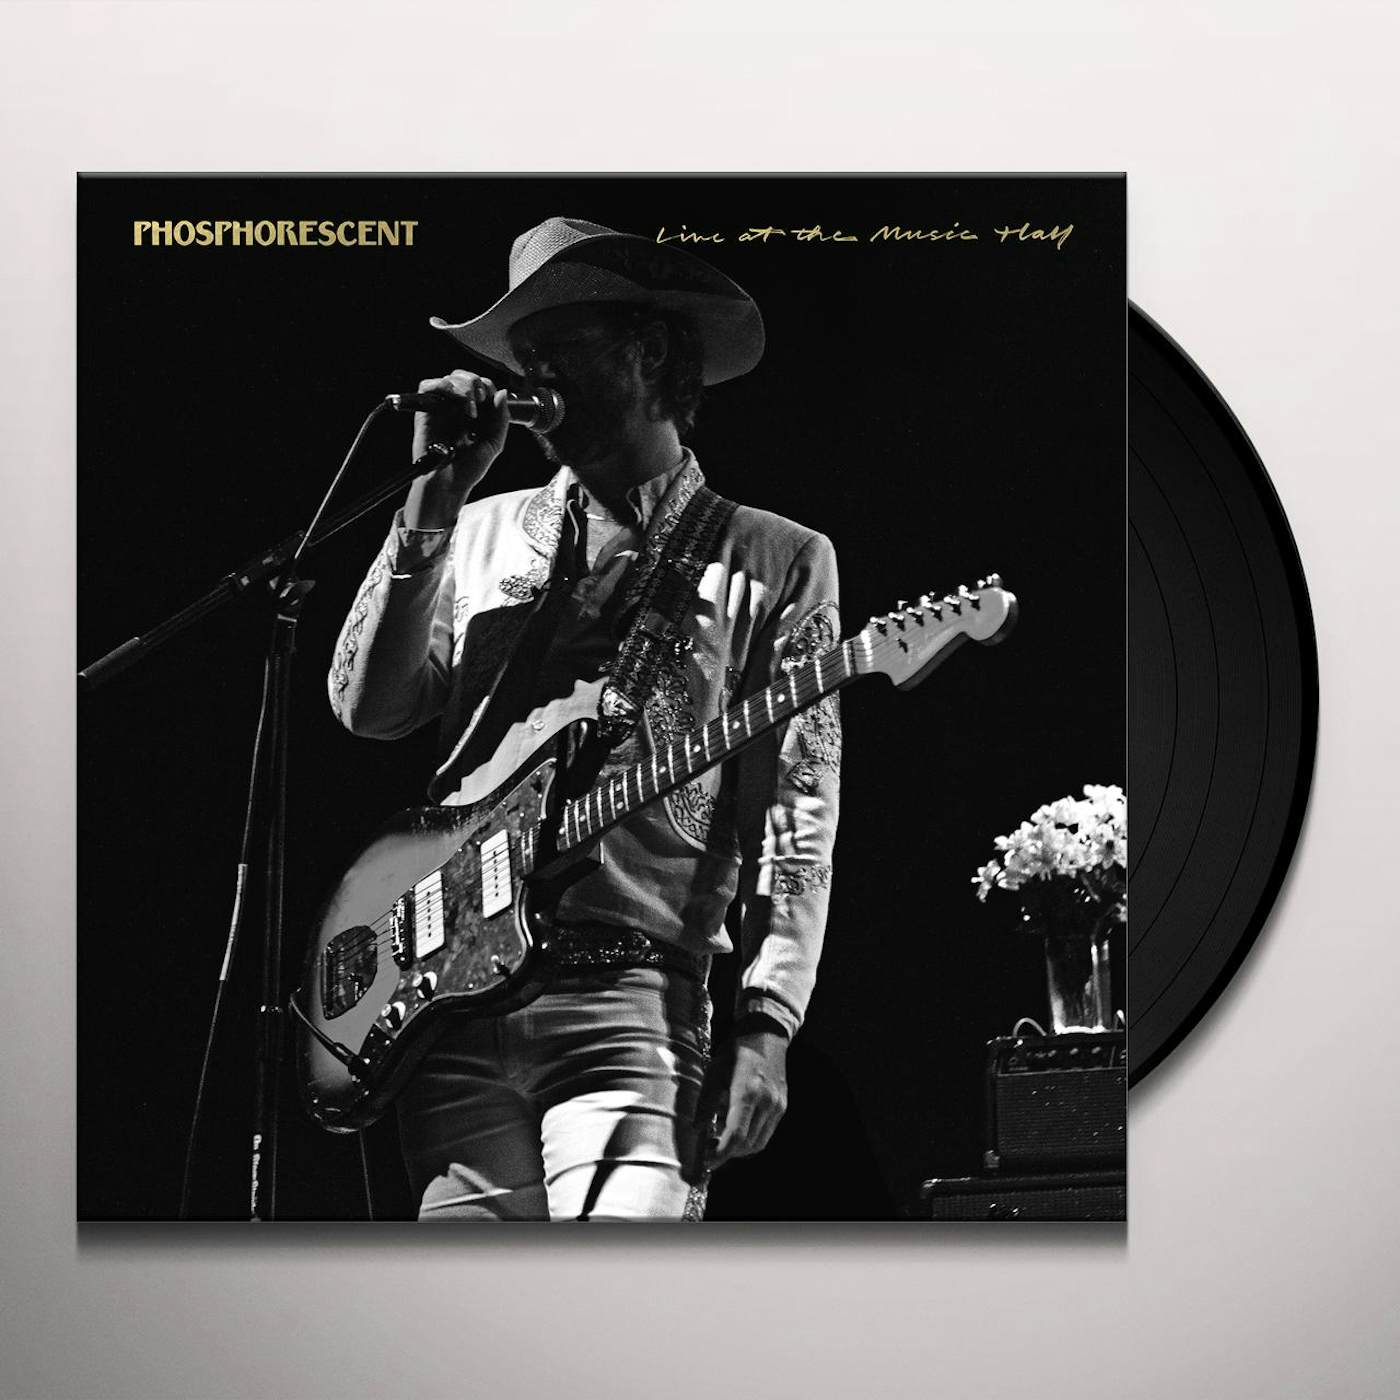 Phosphorescent LIVE AT THE MUSIC HALL Vinyl Record